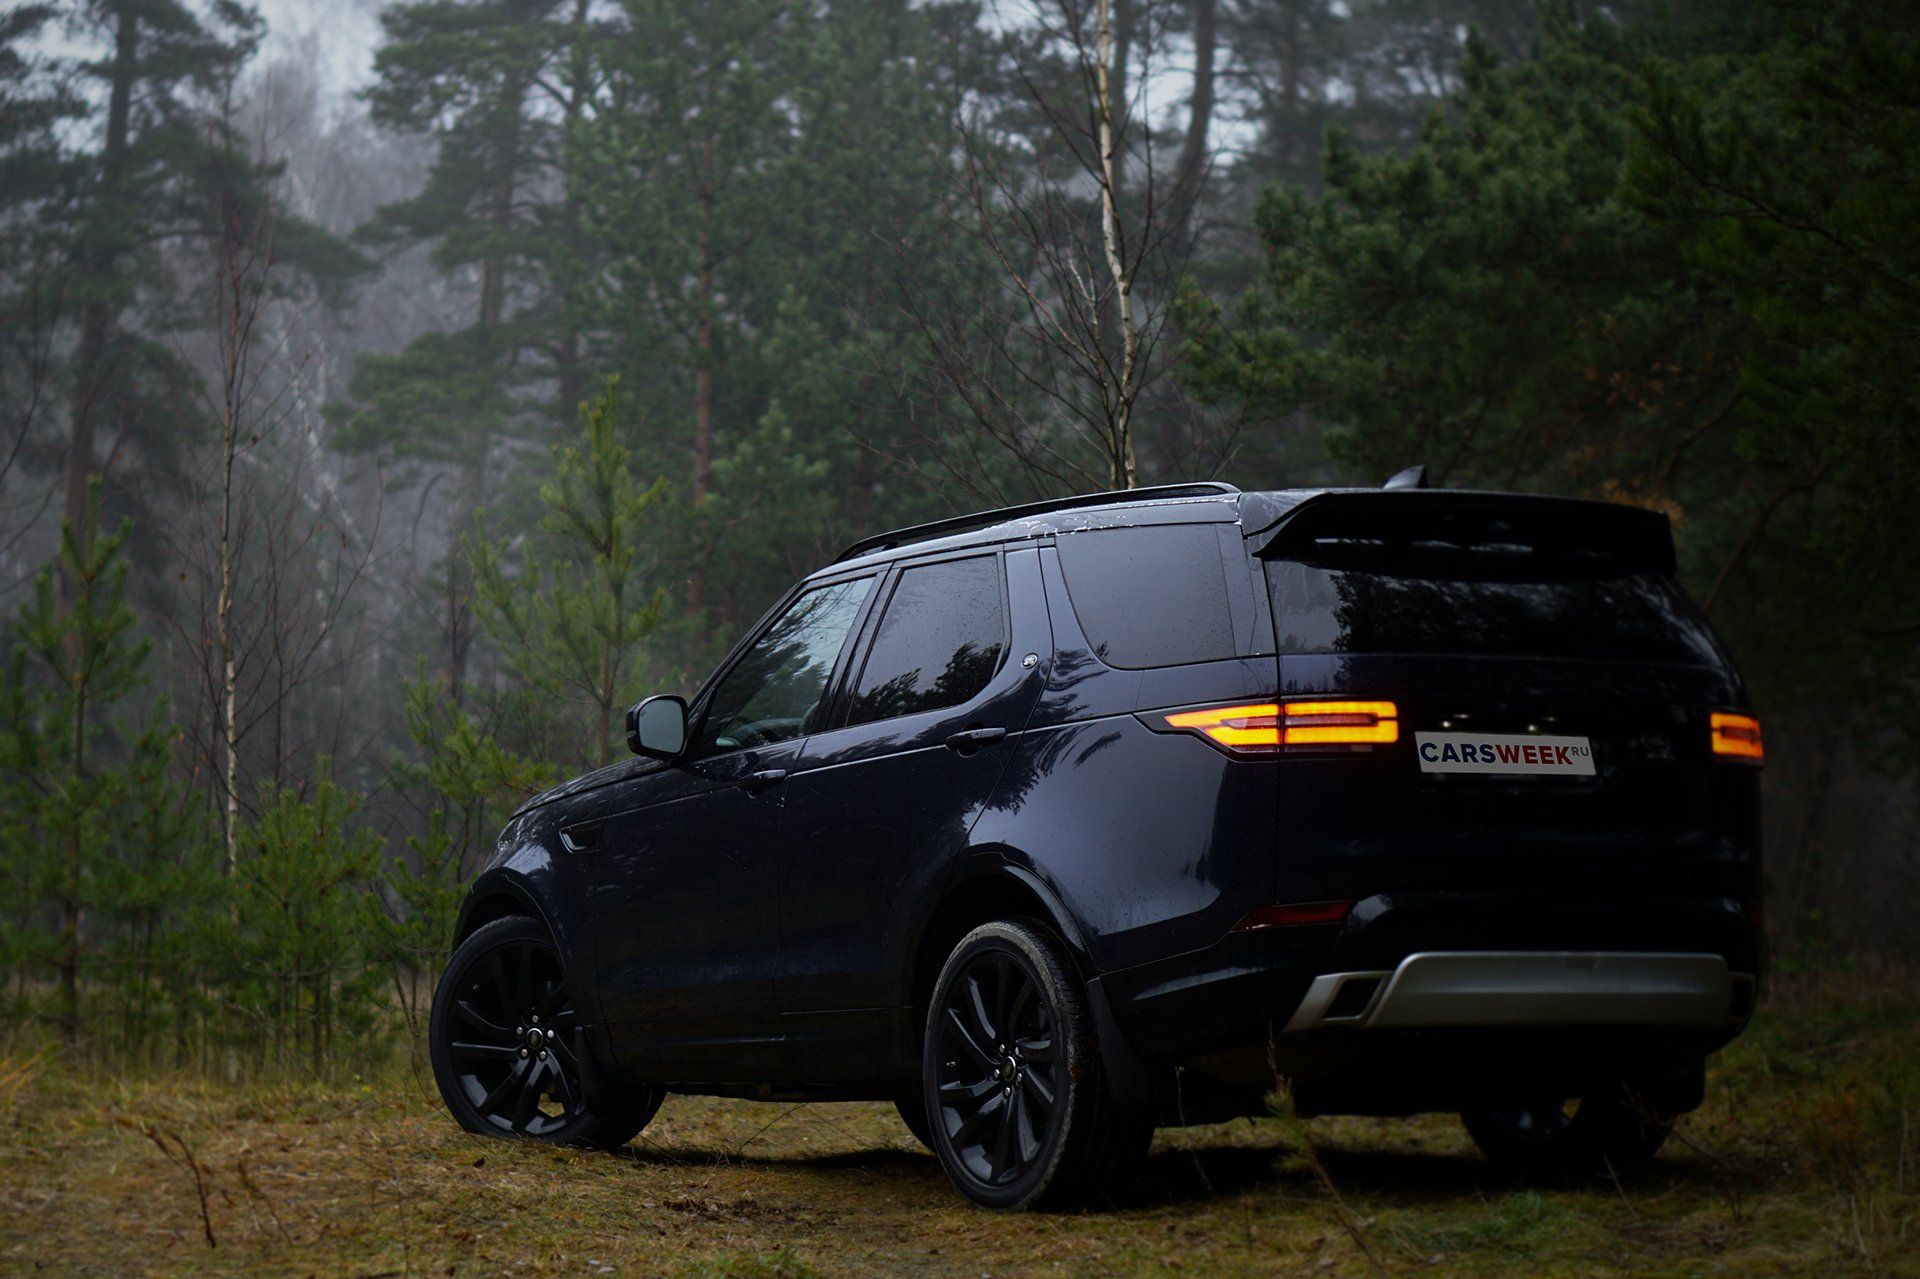 Дискавери док. Range Rover Discovery 2021. Range Rover Discovery 2021 черный. Ленд Ровер Дискавери 5 черный. Land Rover Discovery 5 2021 Black.